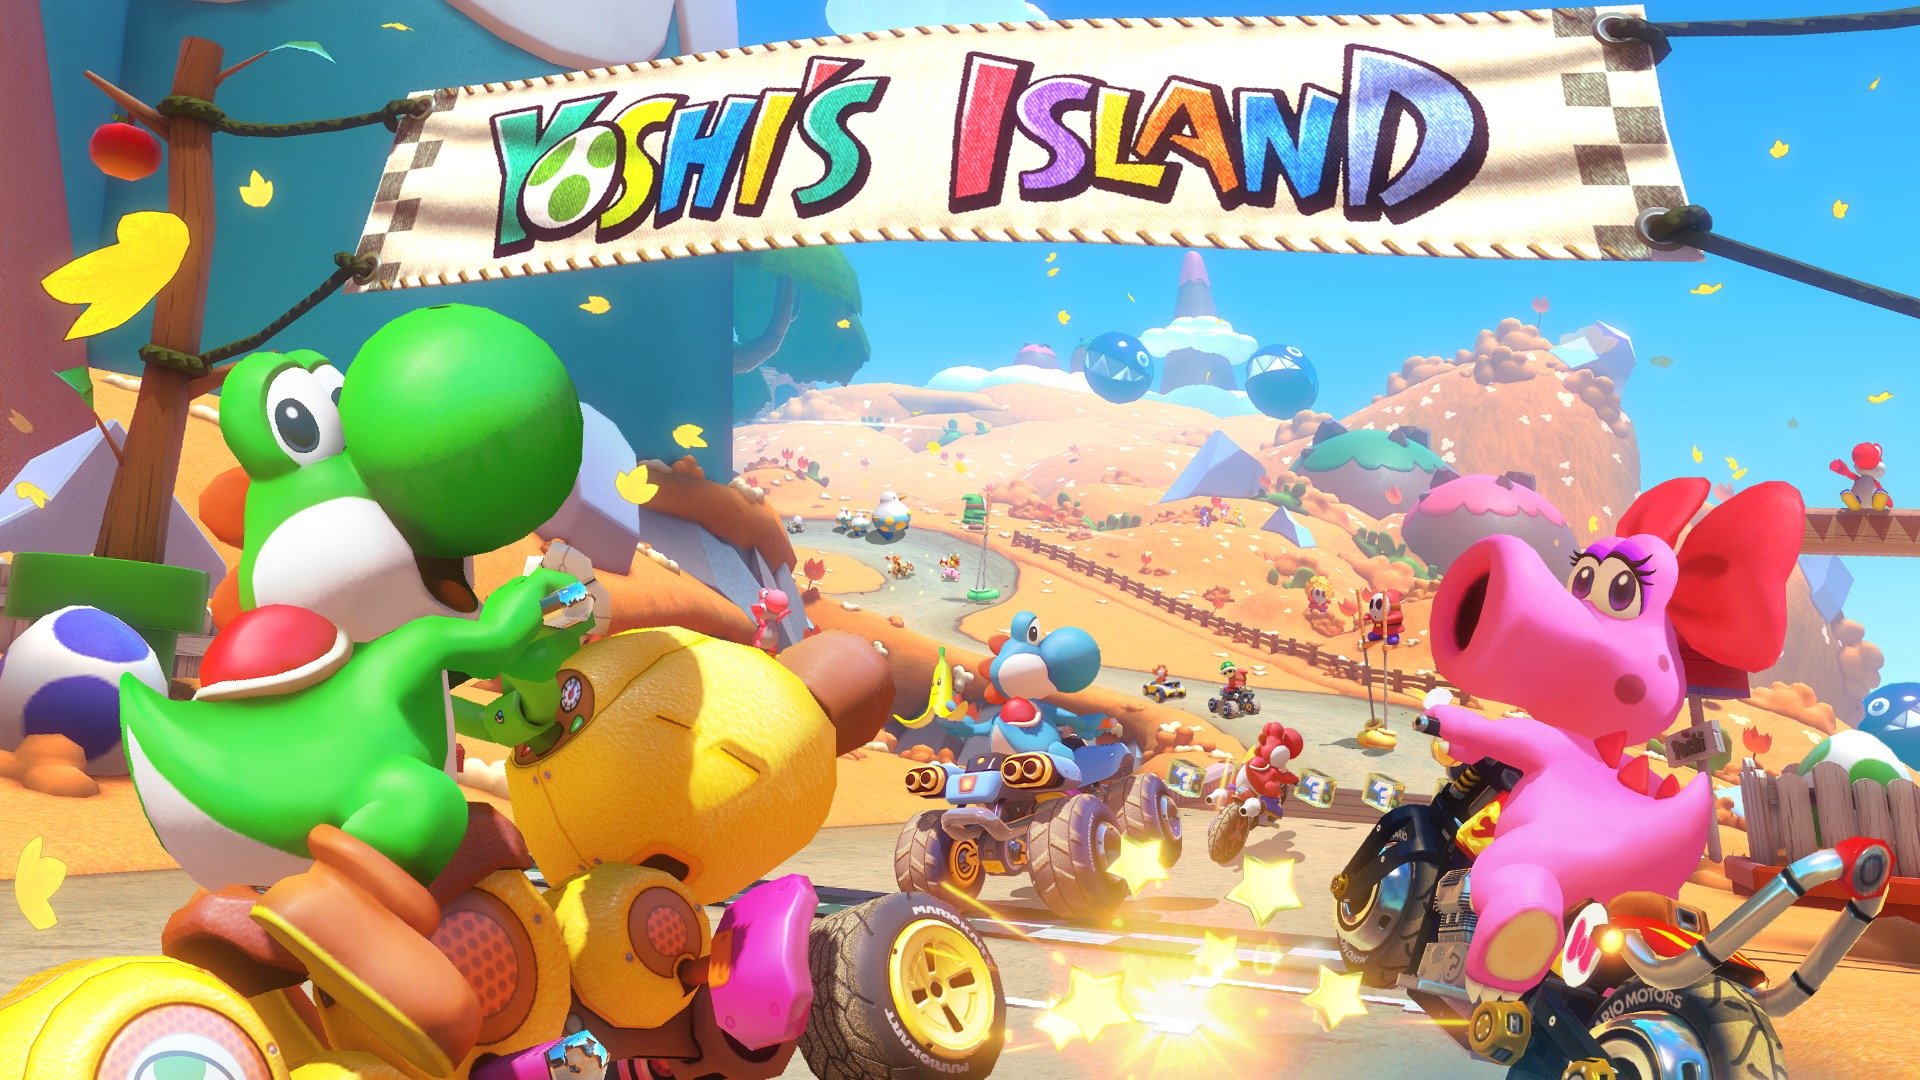 Yoshi's Island in Mario Kart 8 Deluxe